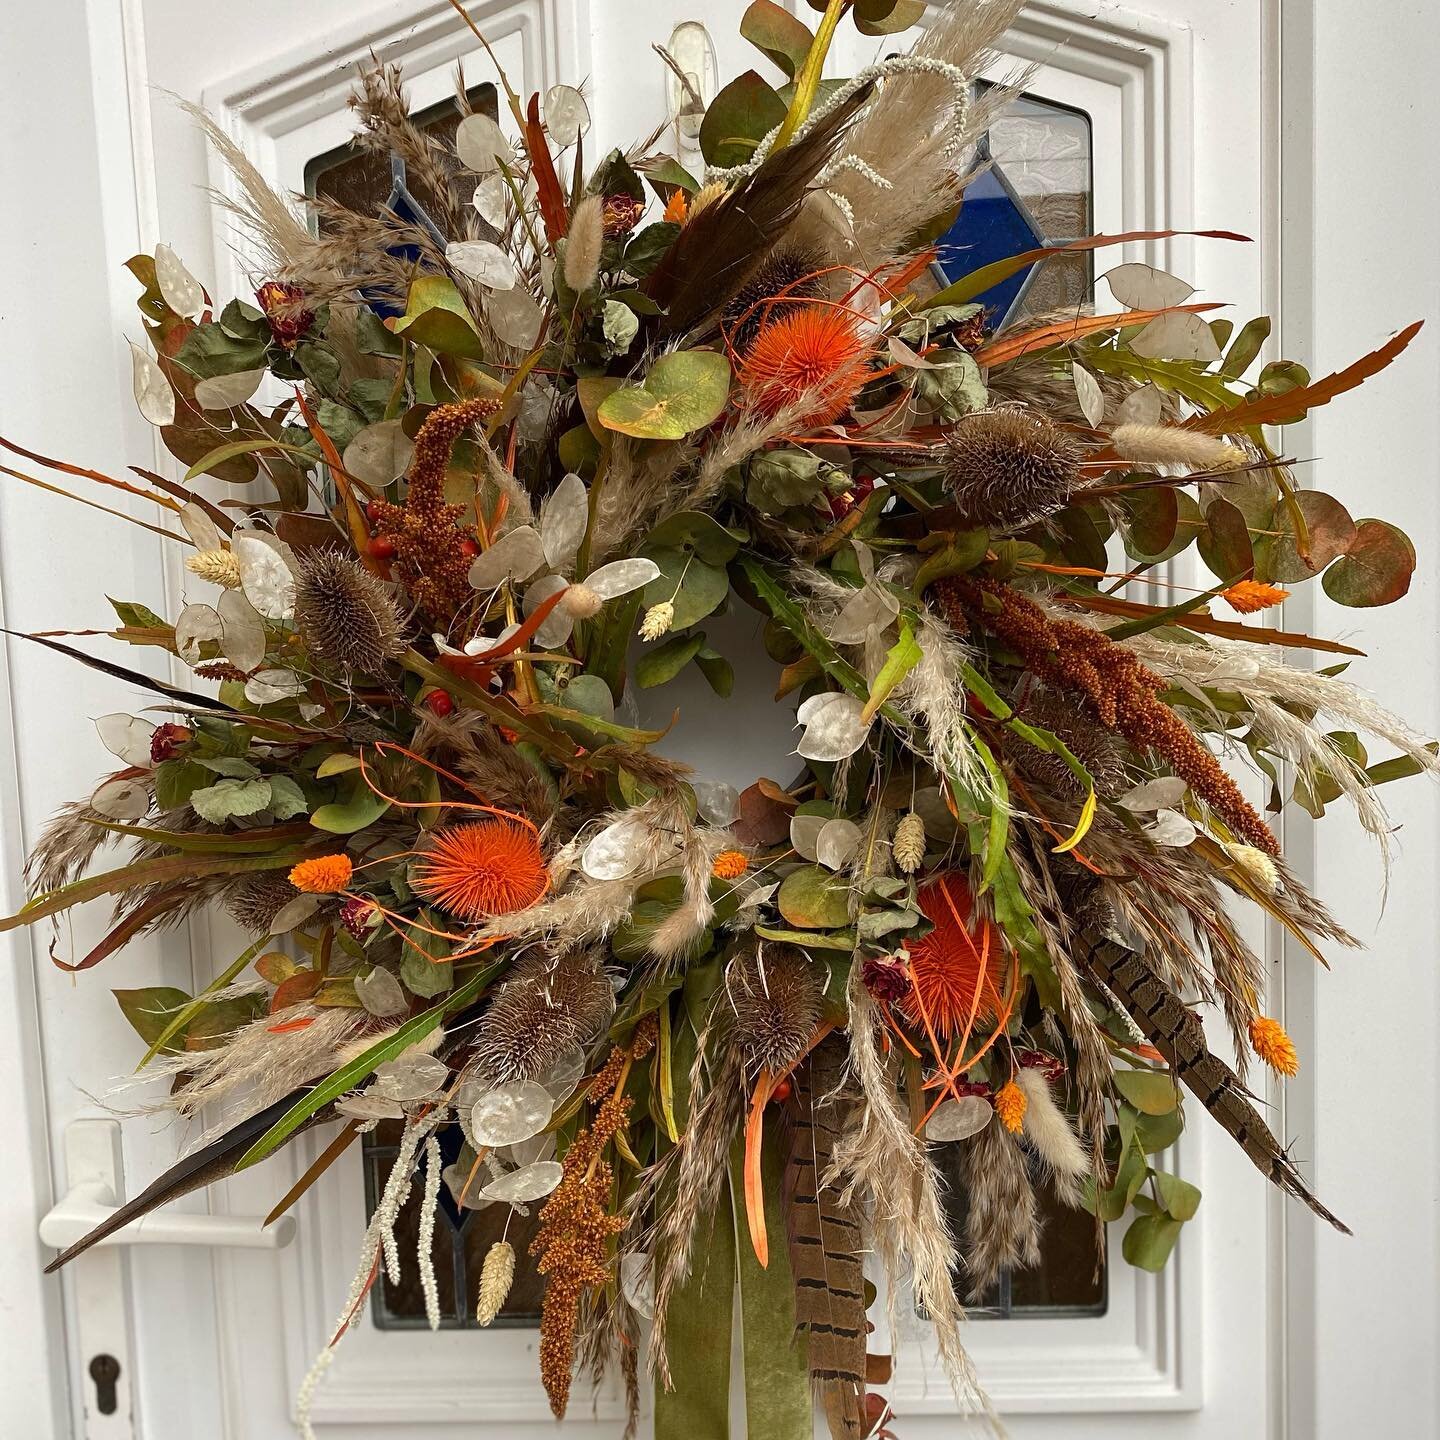 Happy 1st of October!
Time to get those Autumnal wreaths up 🍂🍁🍂 

#autumnwreaths #autumnleaves #doorwreath #autumnnails #cosyseason #hellooctober #pampas #lunaria #bunnytails #cardo #wreathsofinstagram